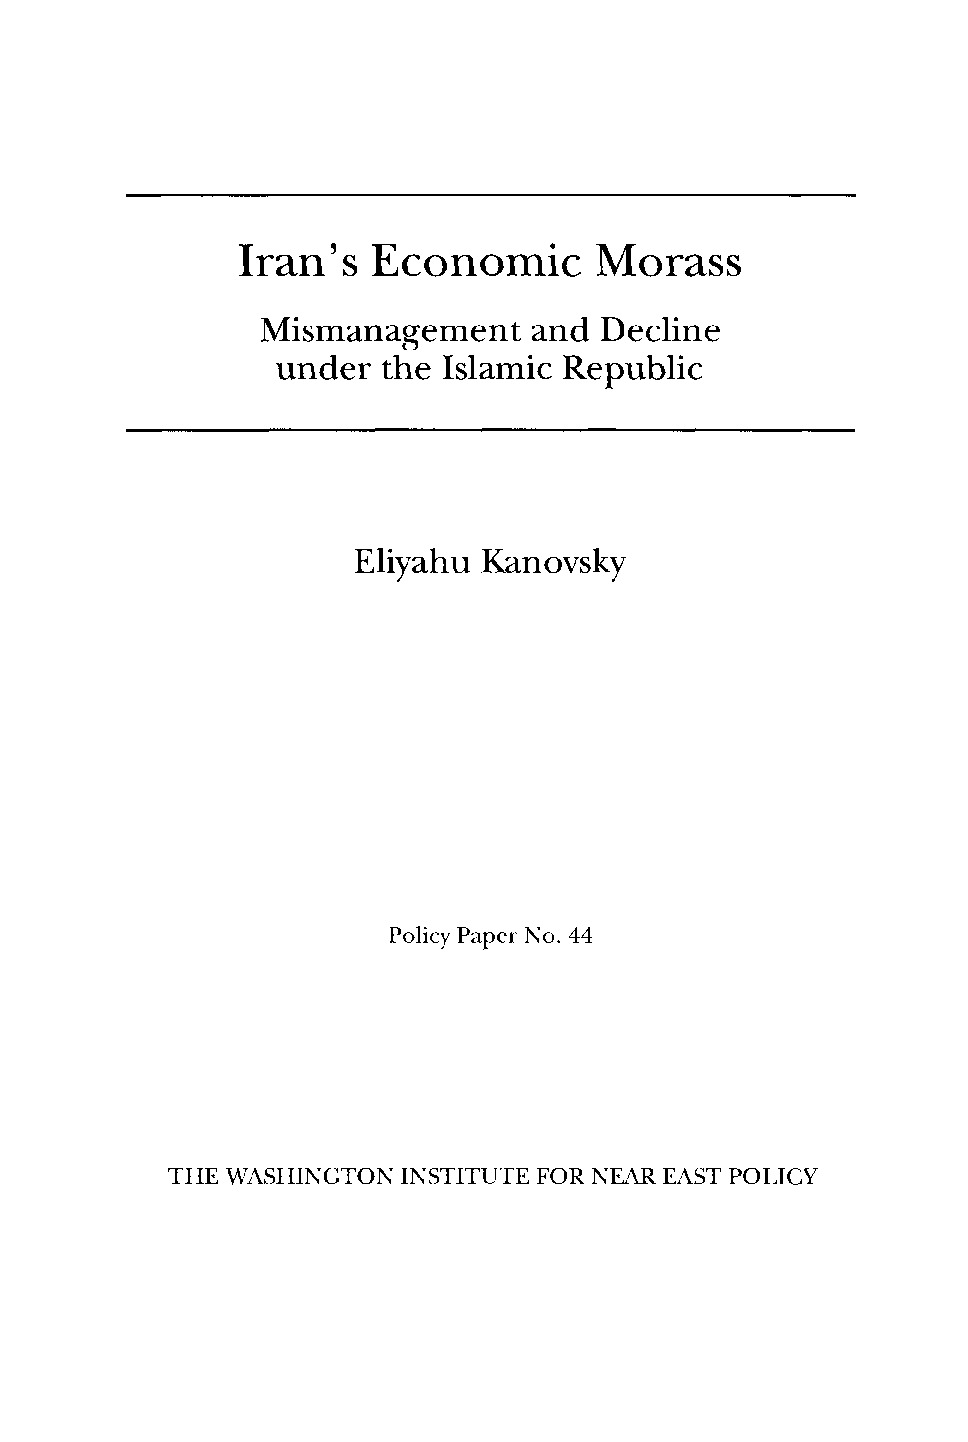 PP_44_IransEconomicMorass.pdf